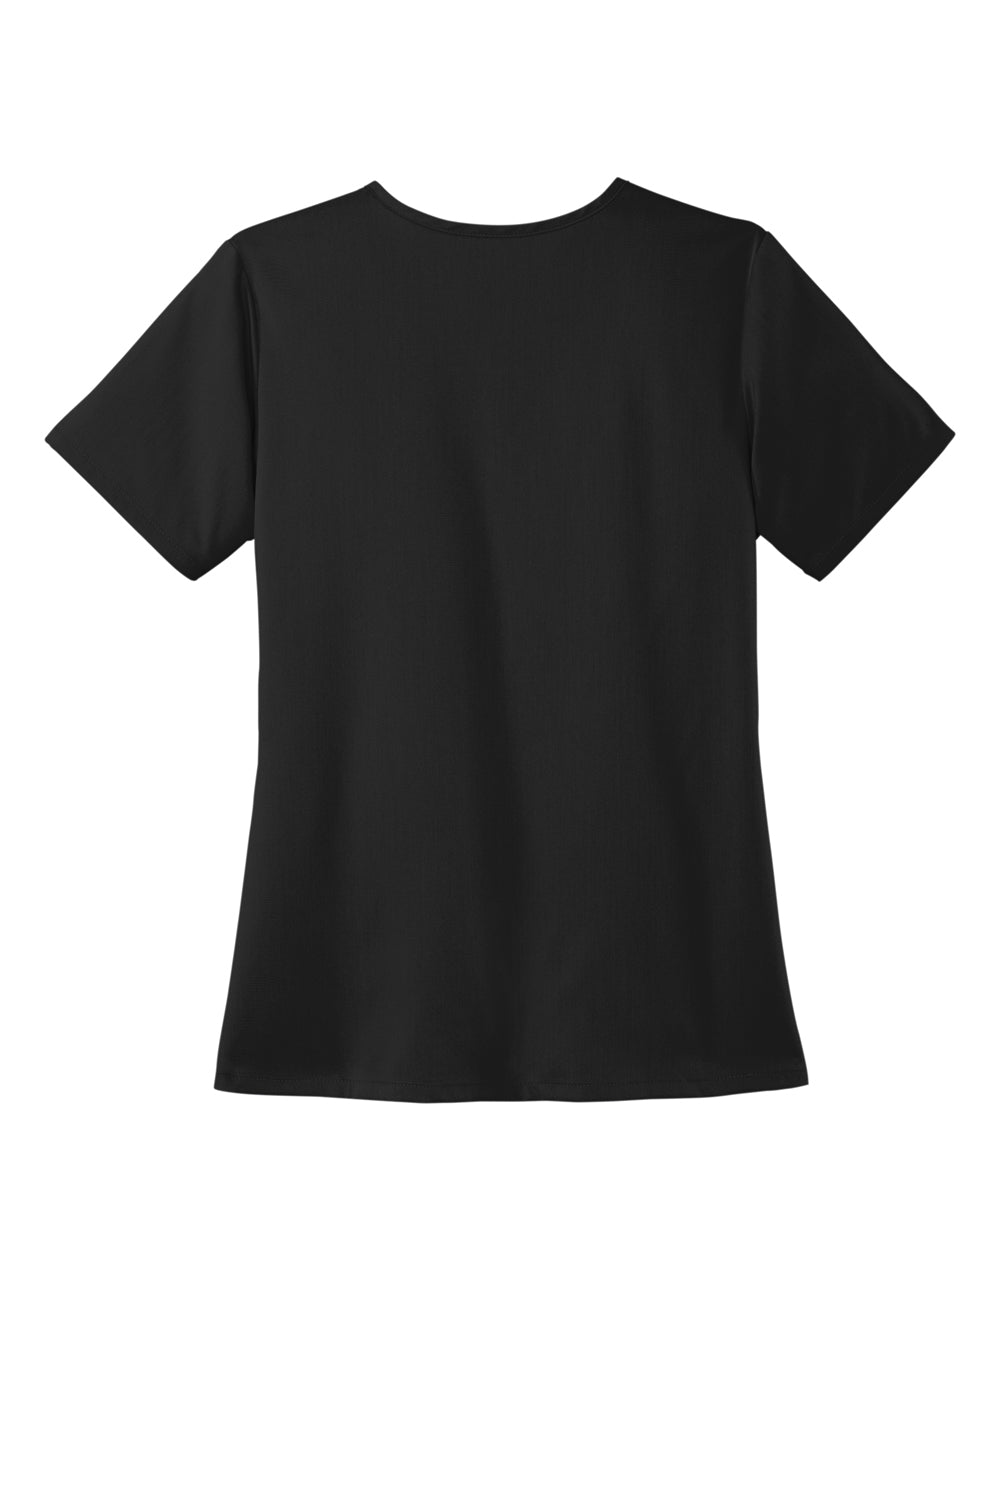 Wonderwink WW4168 Premiere Flex Short Sleeve V-Neck Shirt w/ Pockets Black Flat Back